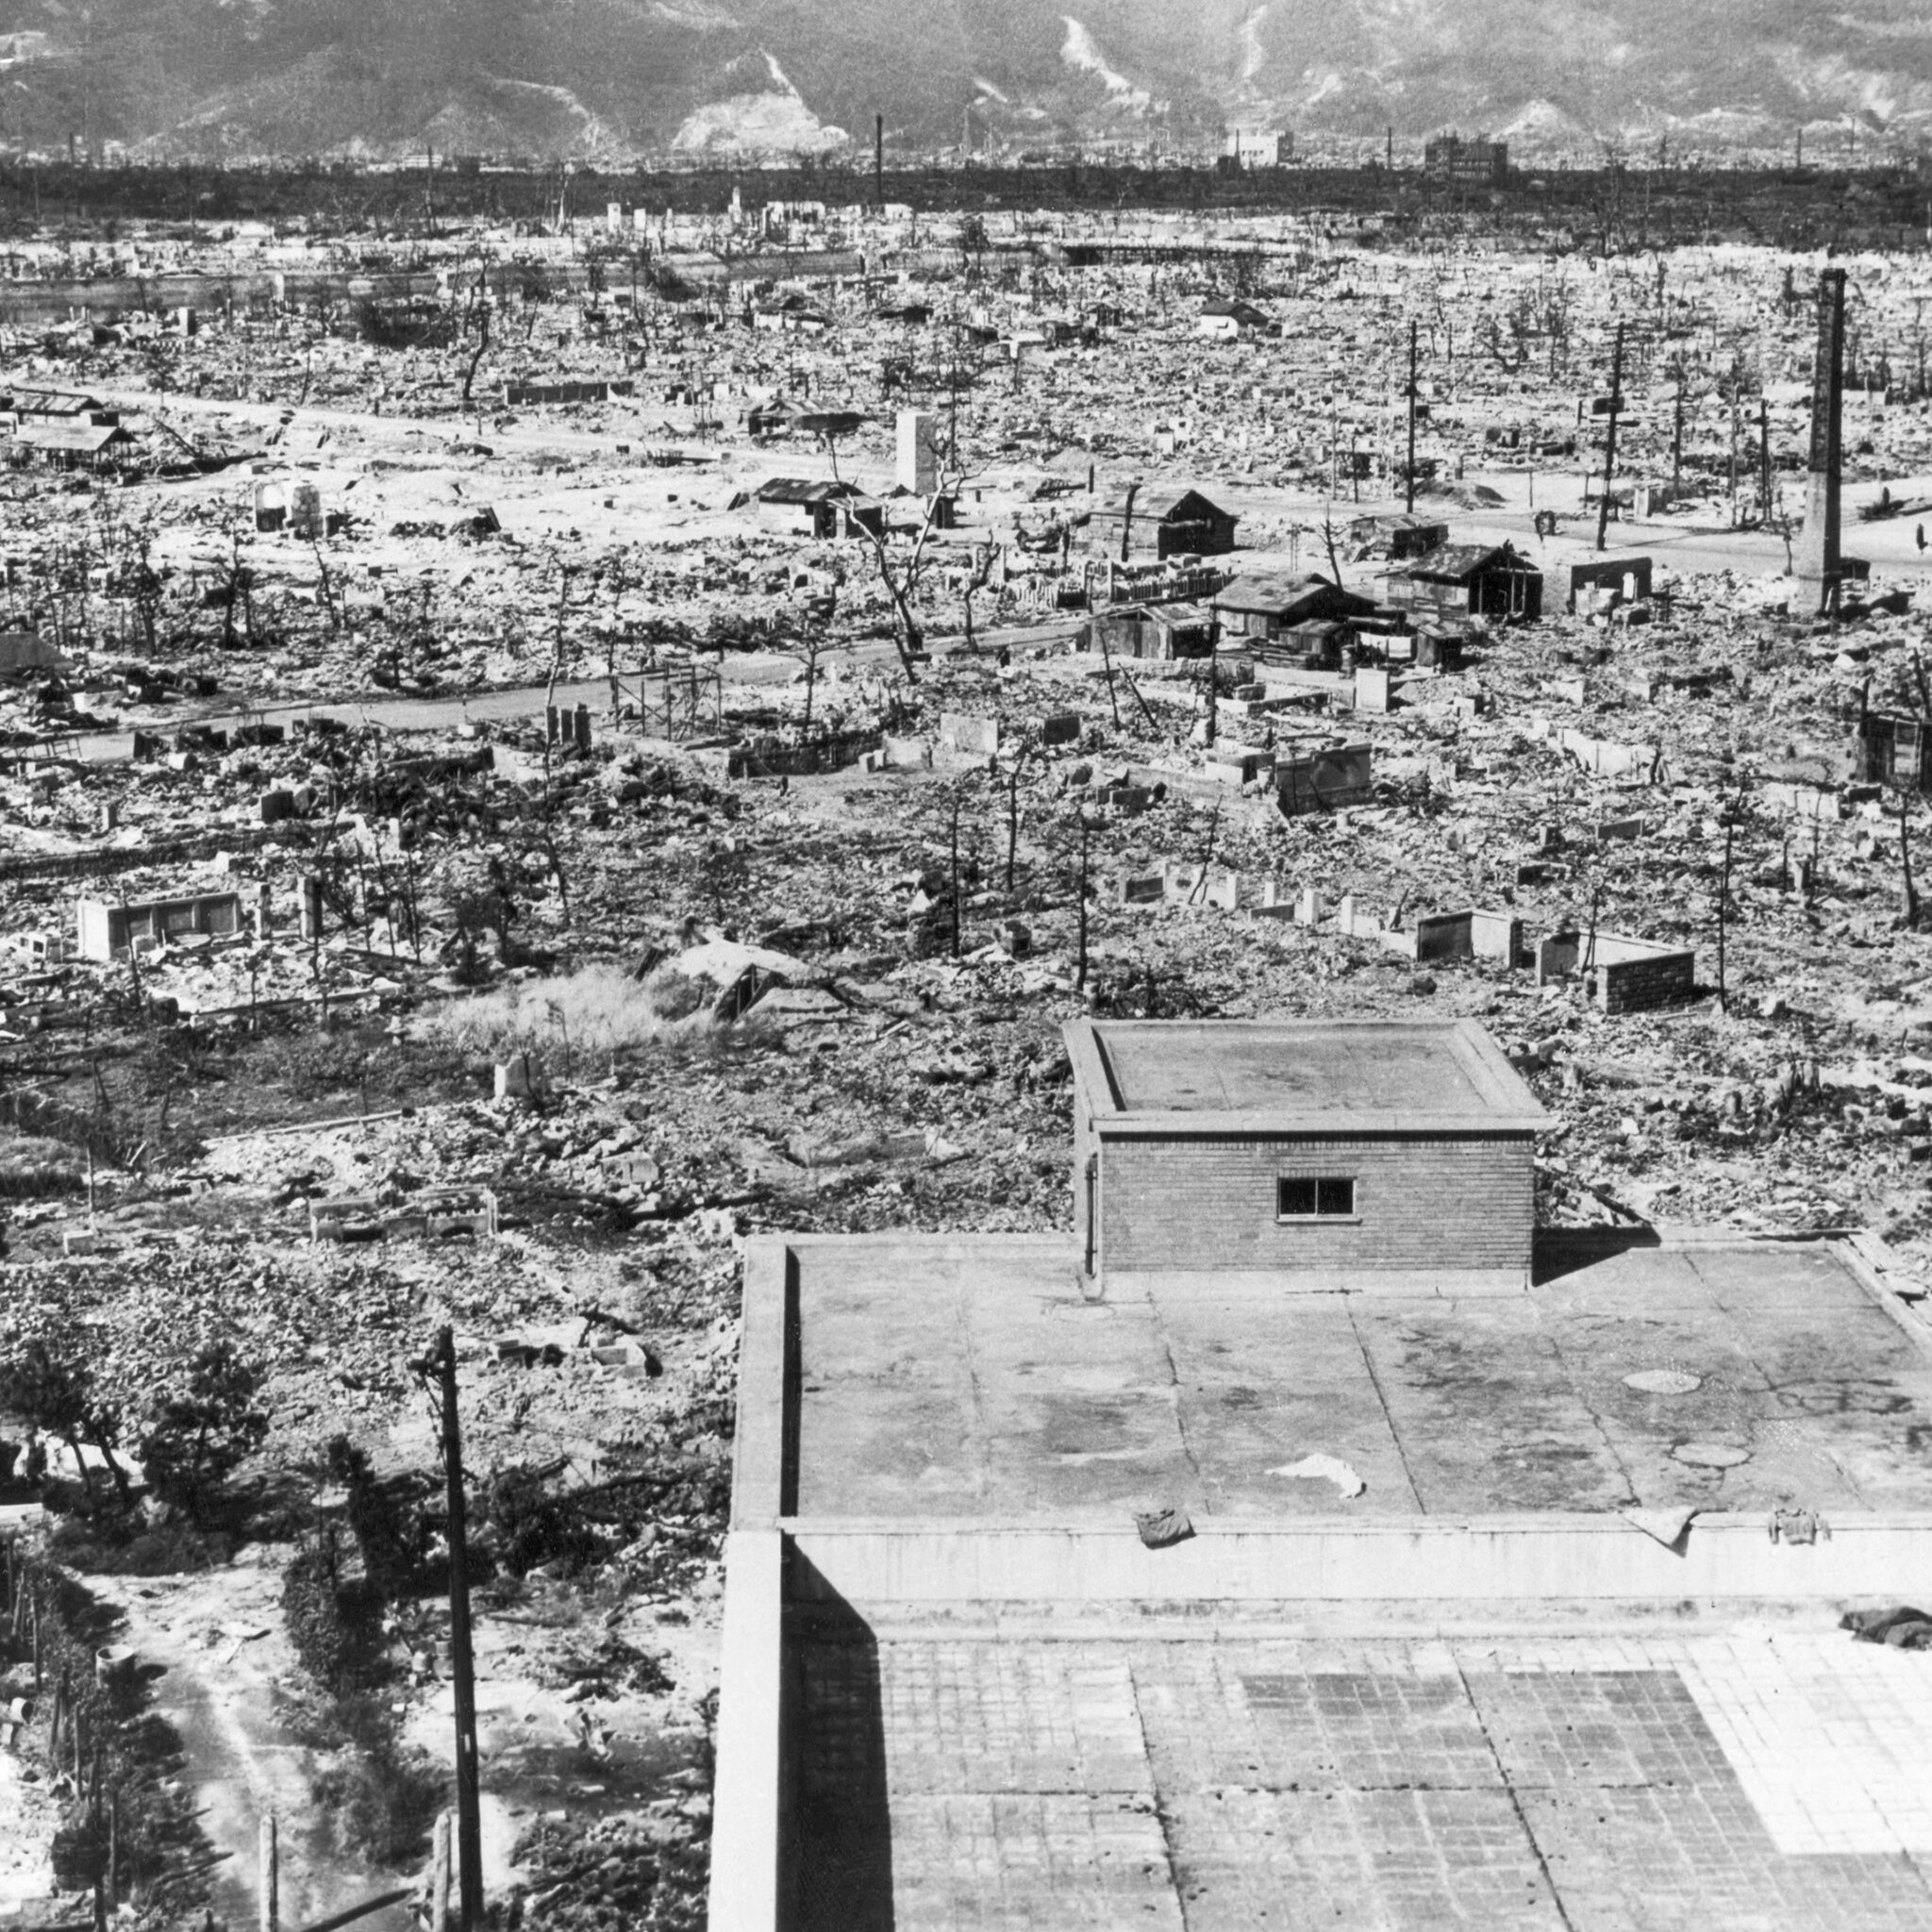 Hiroshima in October 1945